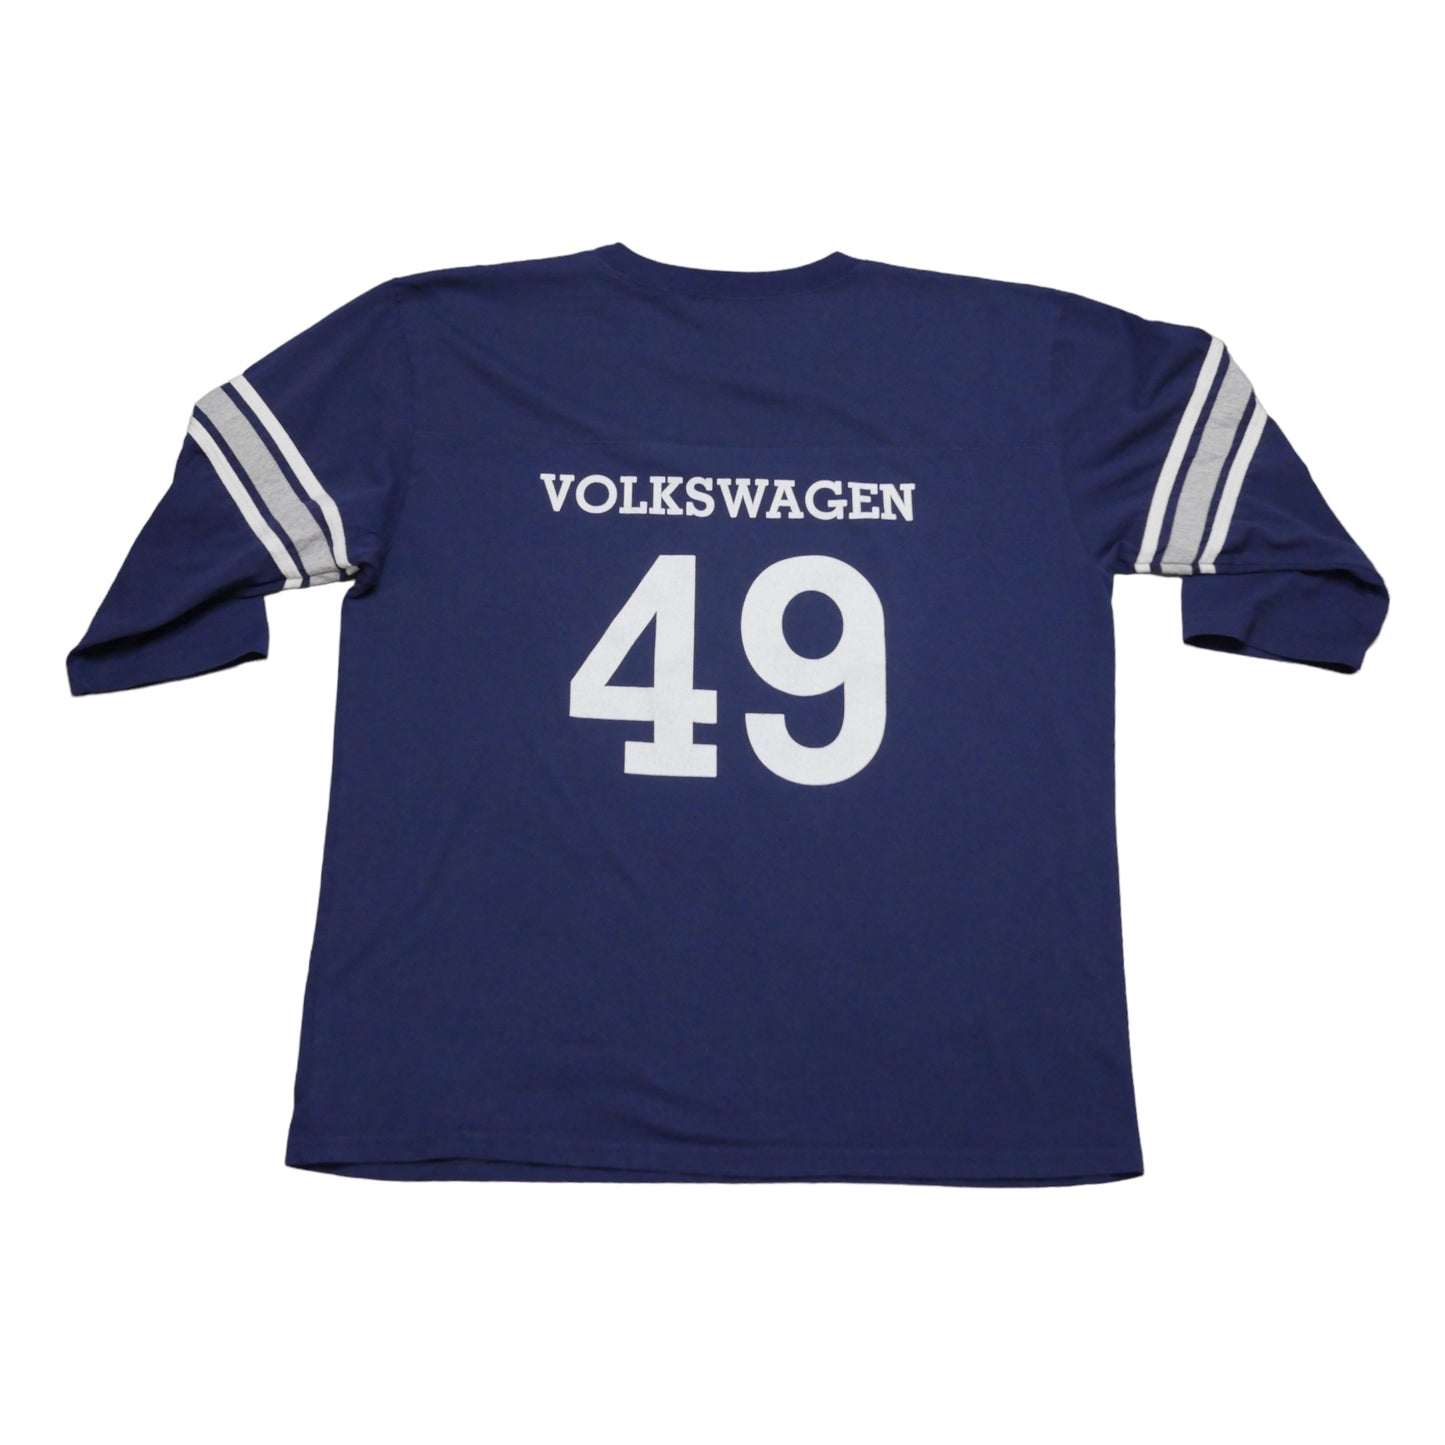 VW Volkswagen Raglan Jersey - Large